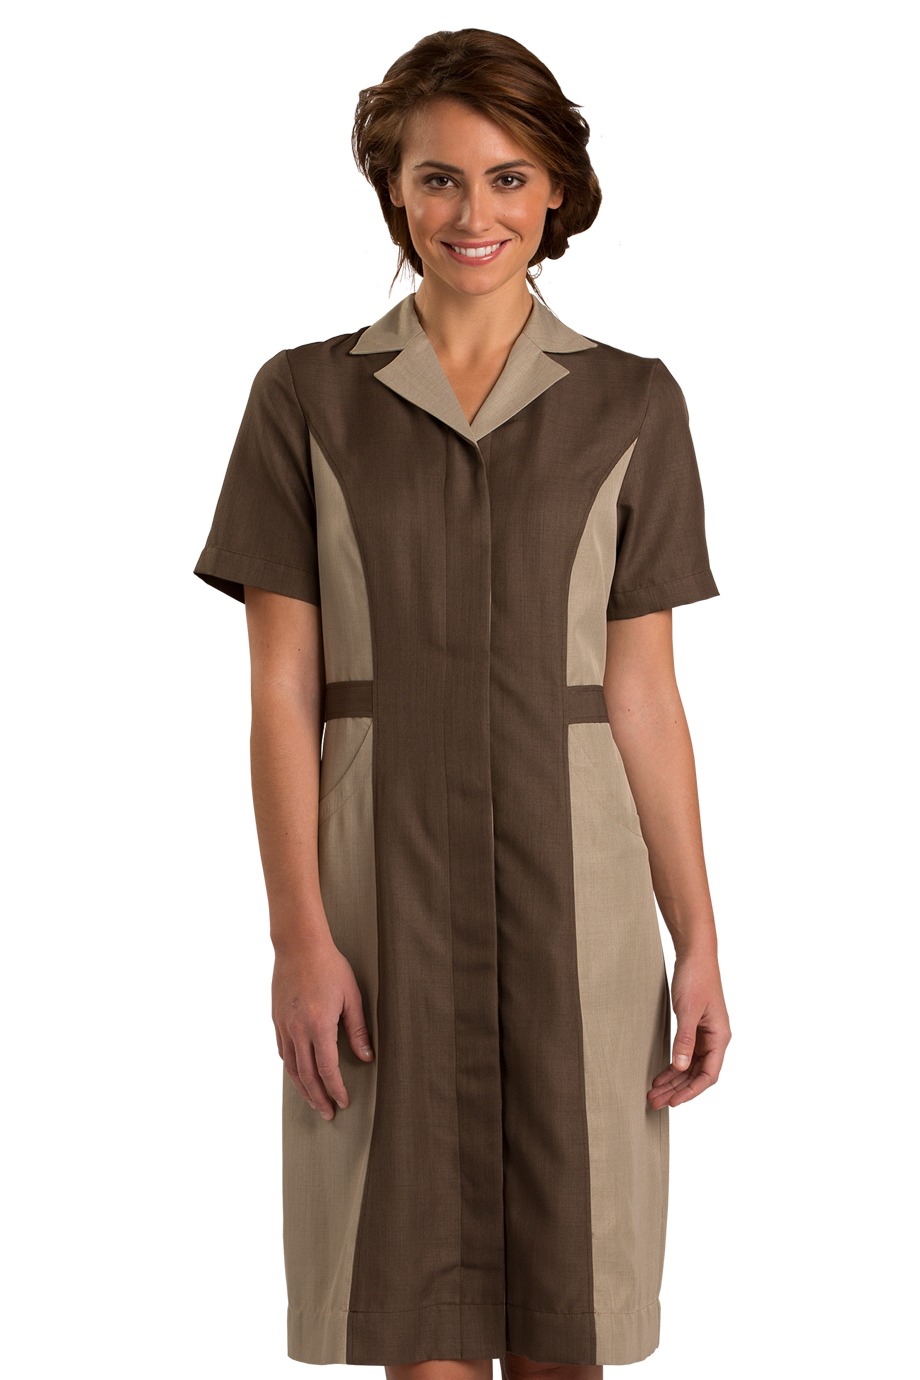 Edwards Garment 9891 - Premier Housekeeping Dress